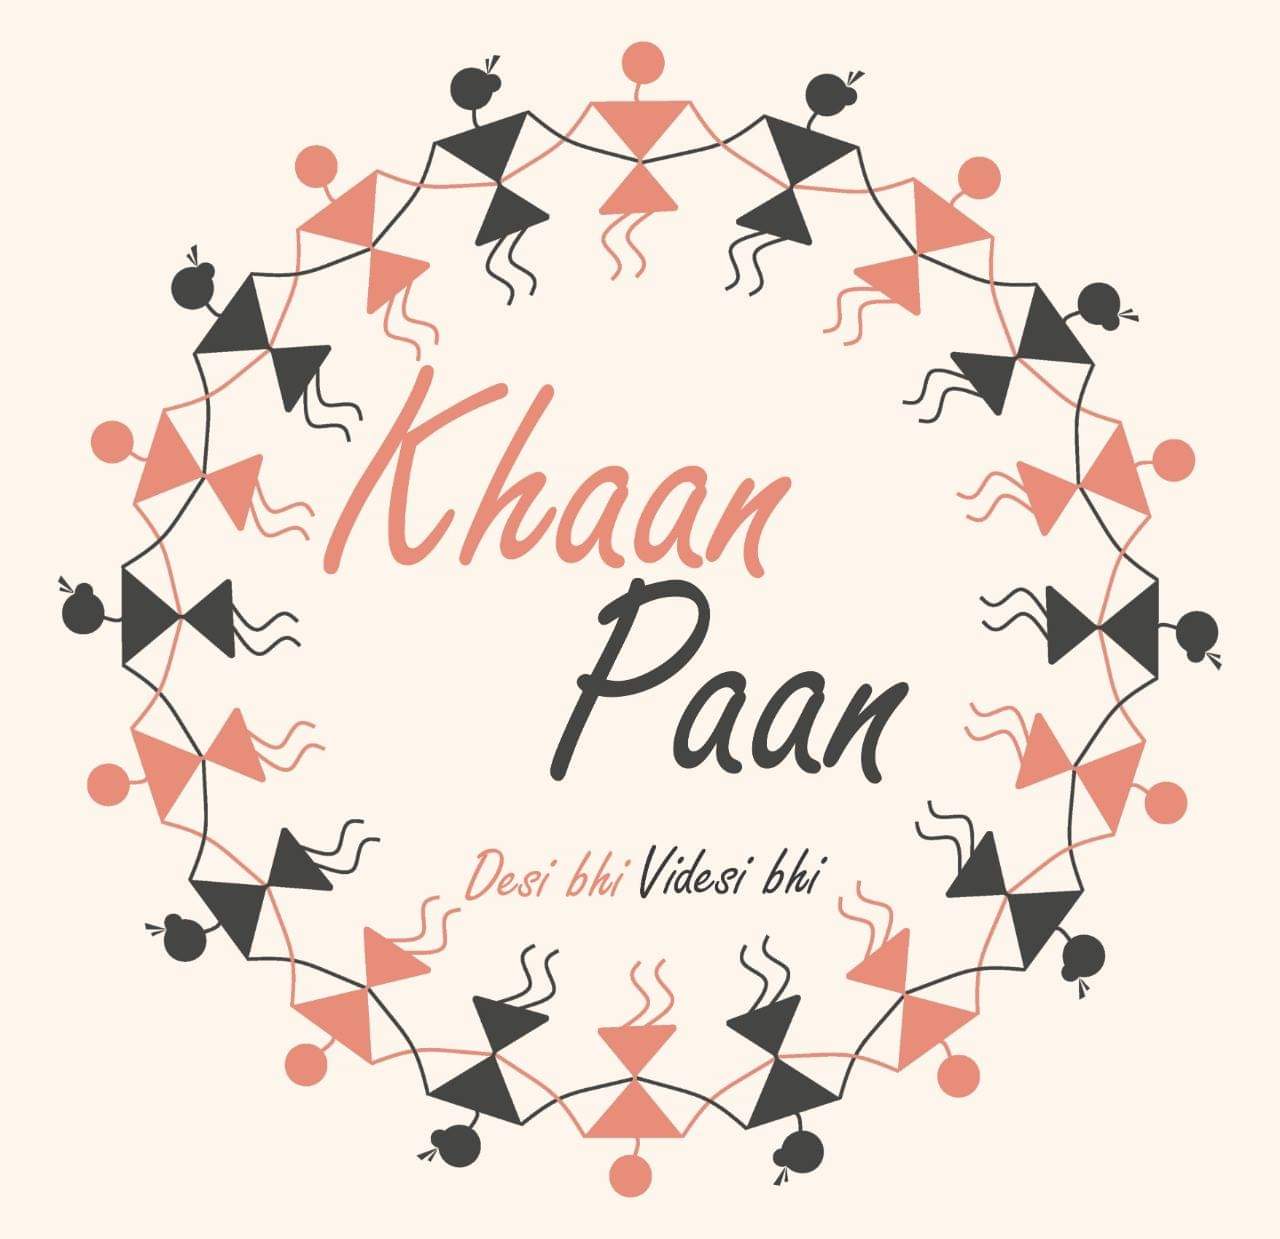 Khaan Paan - Vasant Kunj online delivery in Noida, Delhi, NCR,
                    Gurgaon